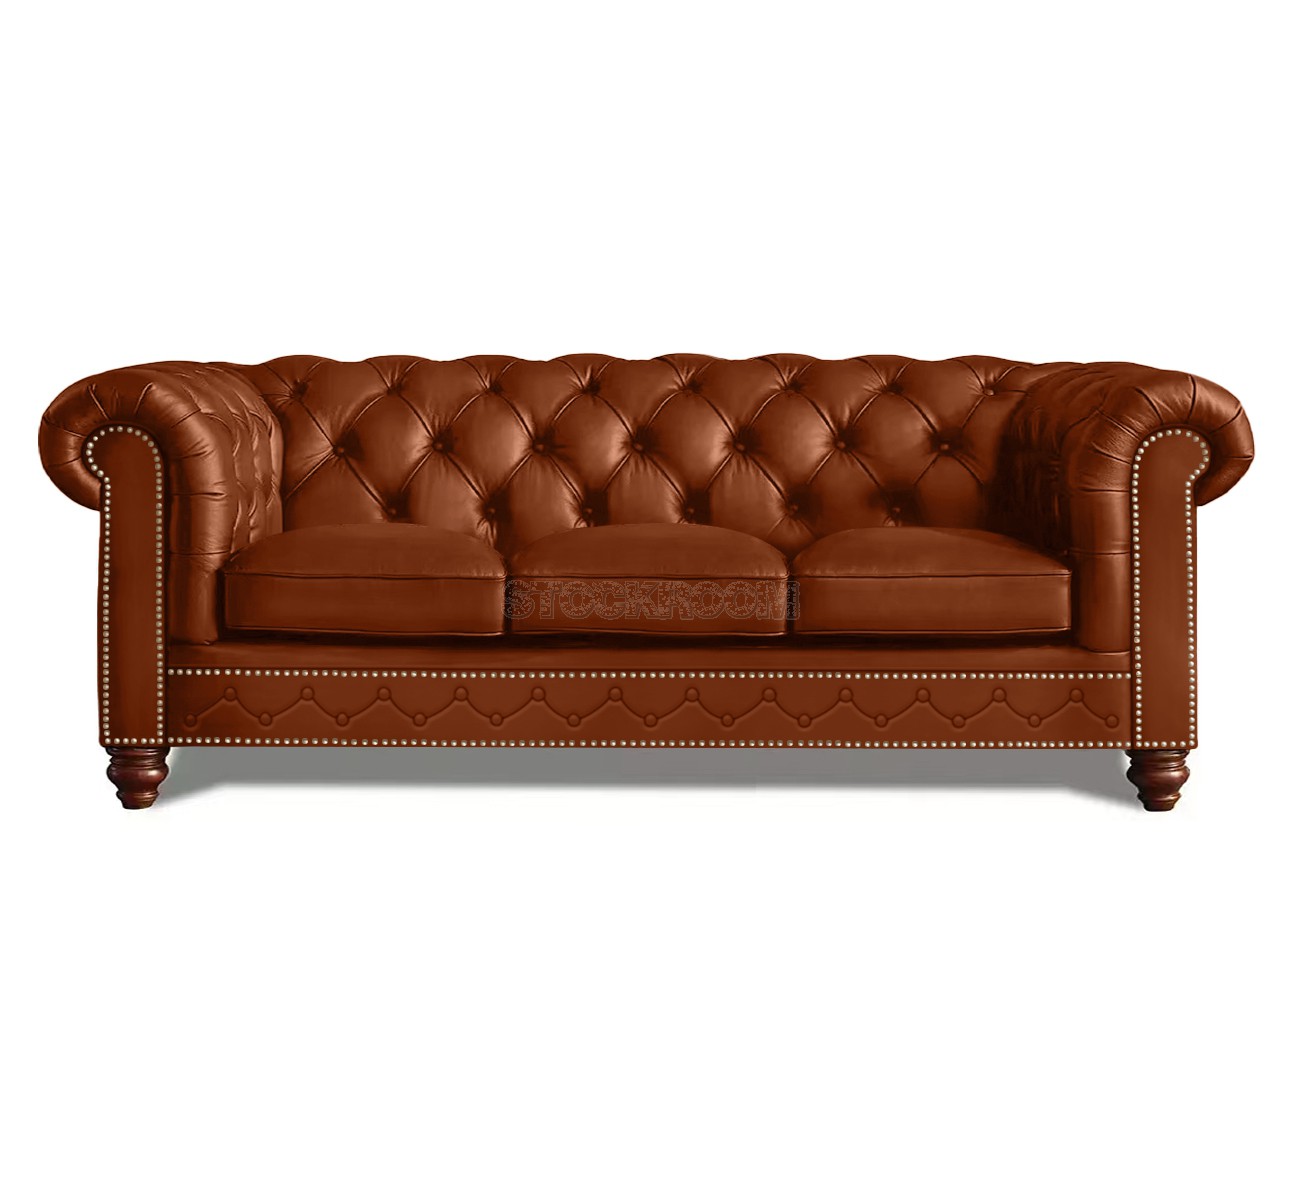 STOCKROOM Chesterfield Sofa - 3 Seater